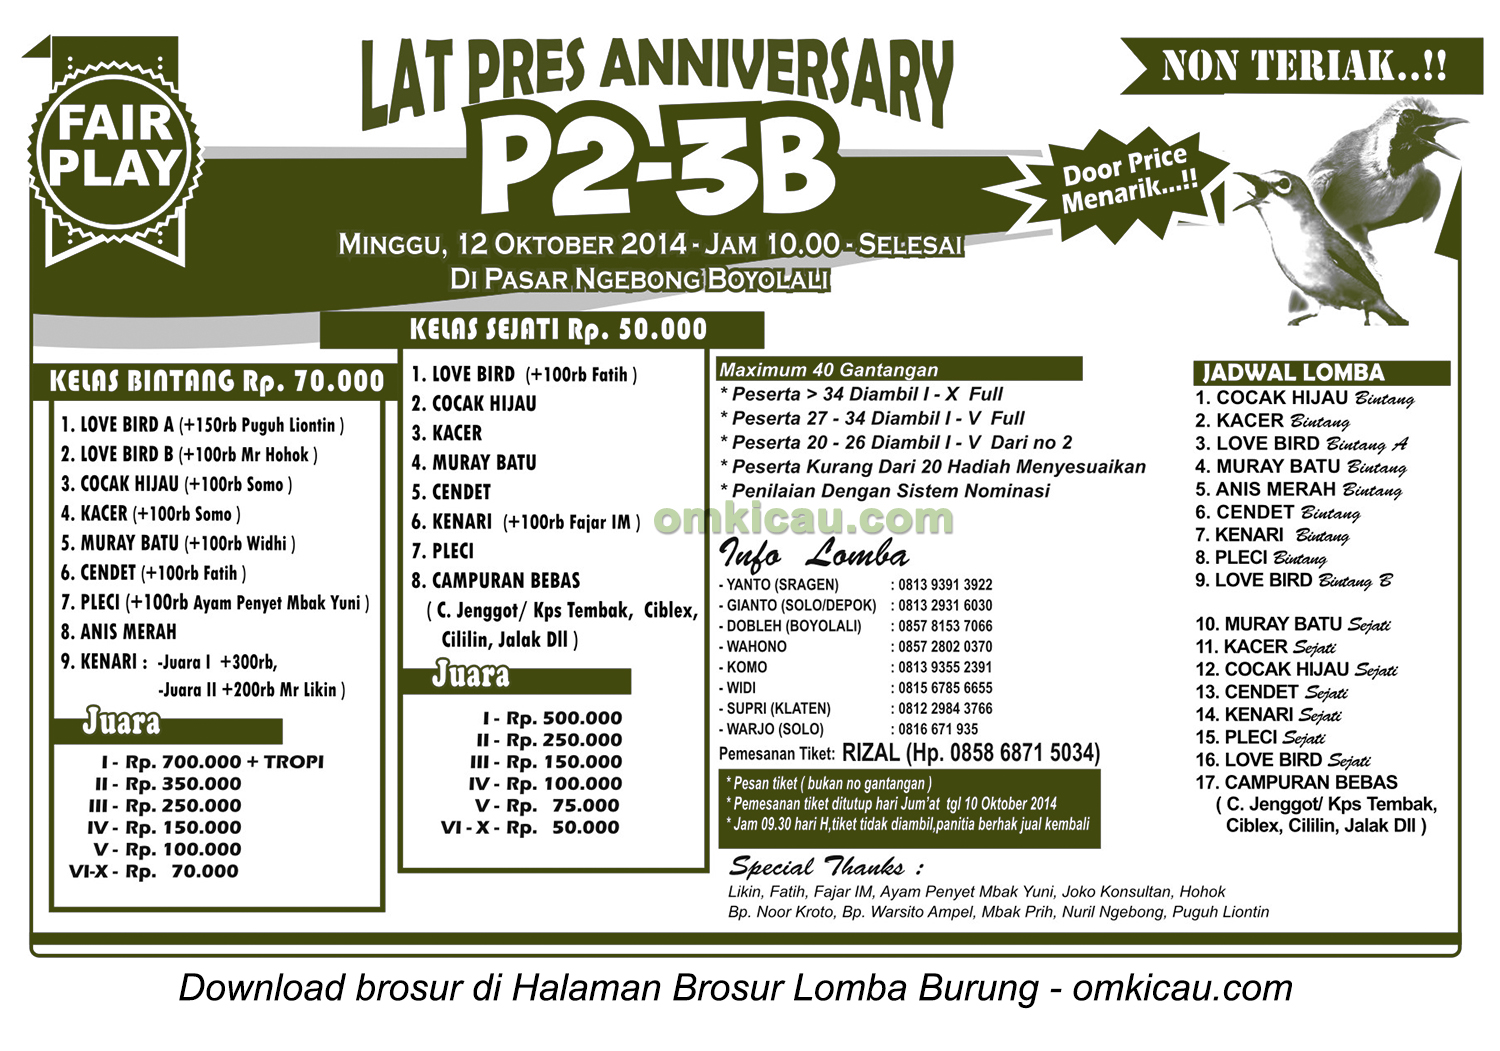 Brosur Latpres Burung Berkicau Anniversary P2-3B, Boyolali, 12 Oktober 2014